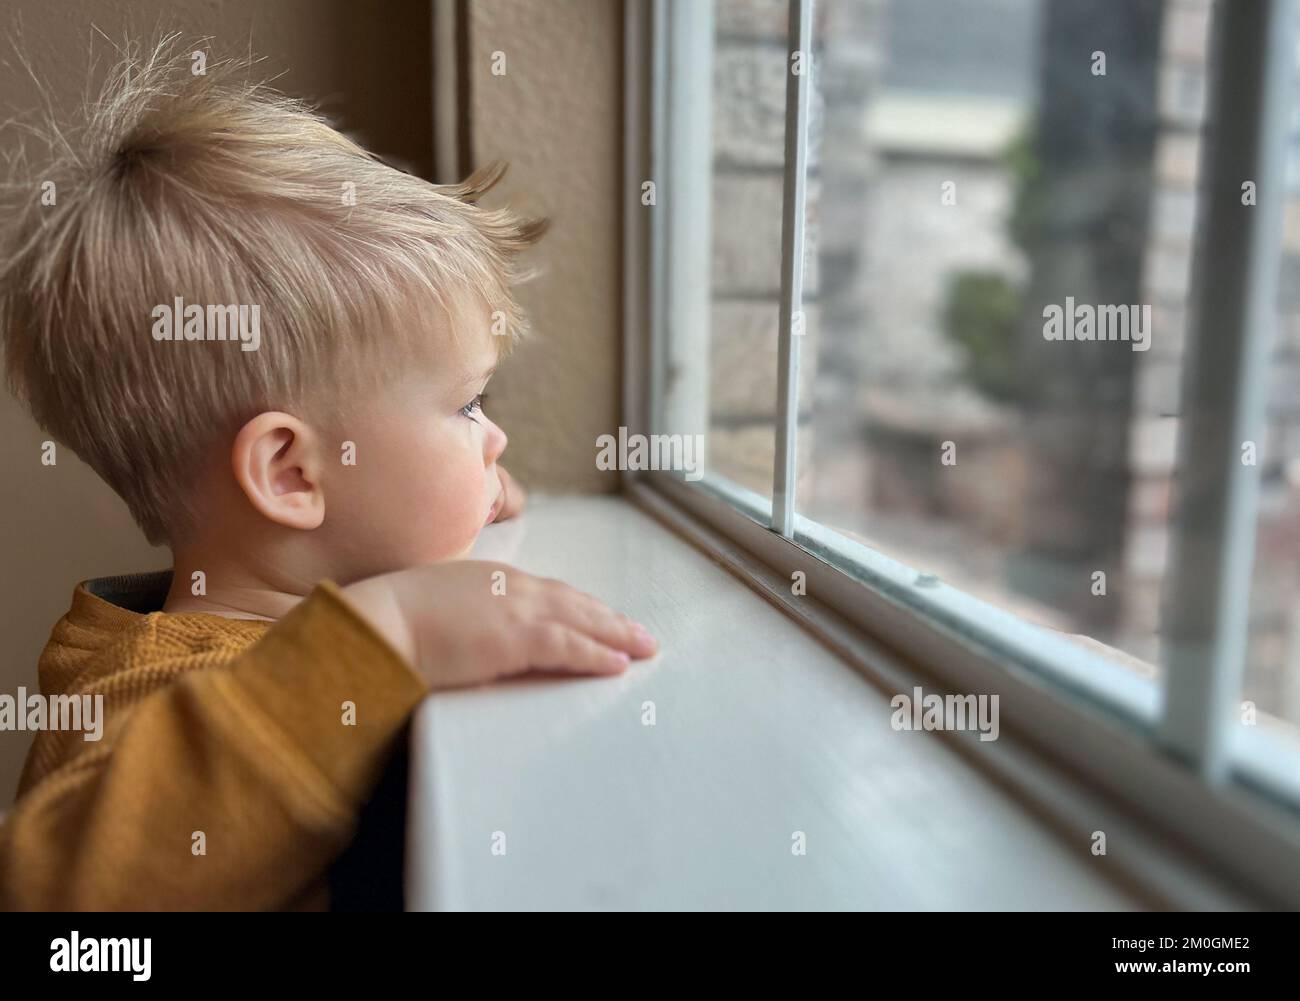 Lindo niño mirando la ventana en casa, retrato de cerca Foto de stock